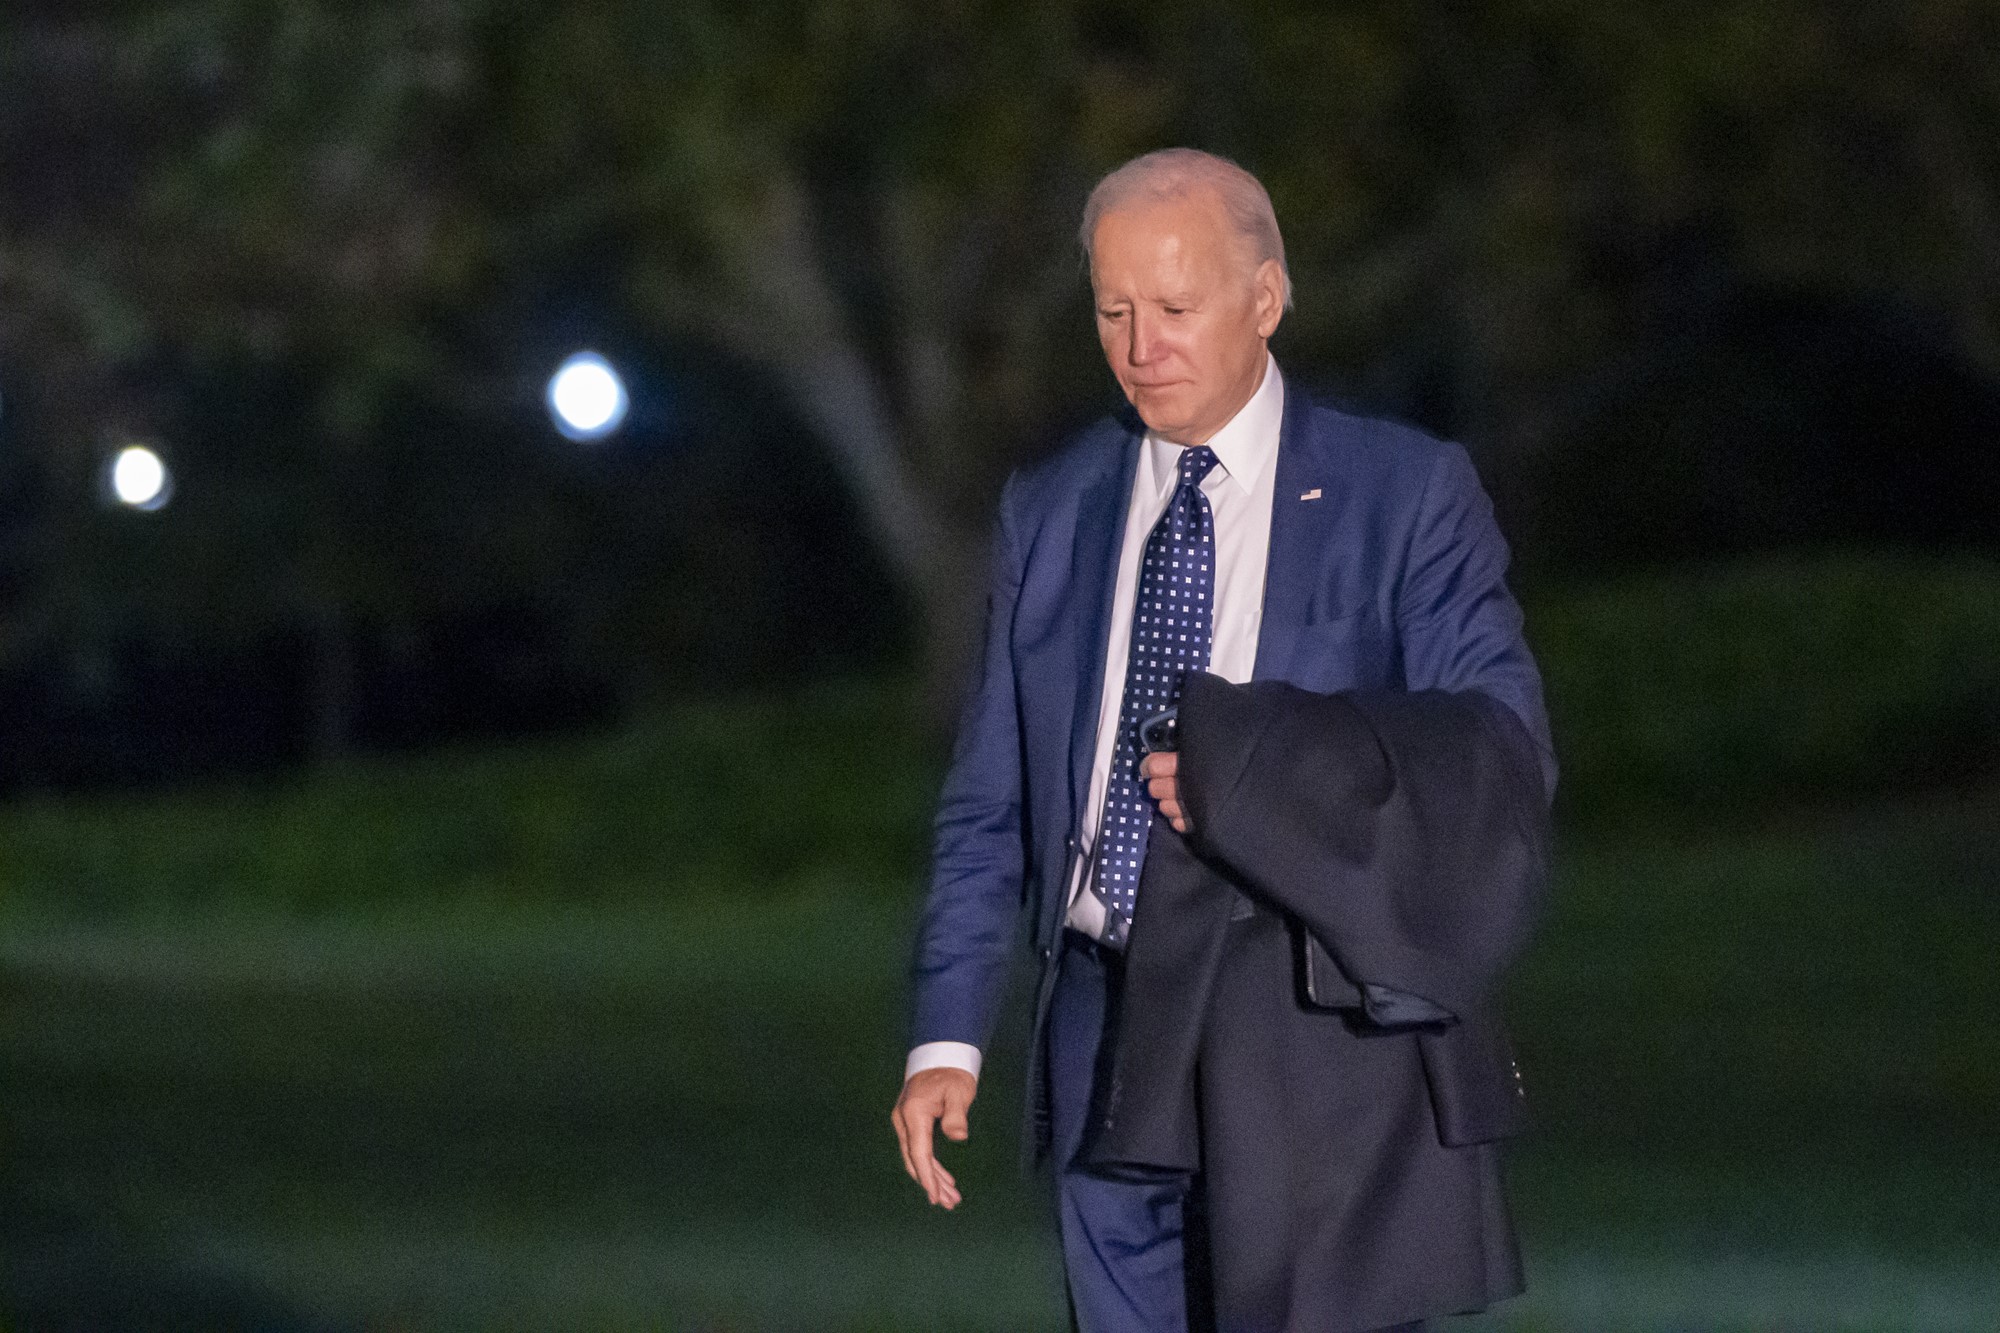 Joe Biden walks looking down, wearing a suit and carrying a jacket